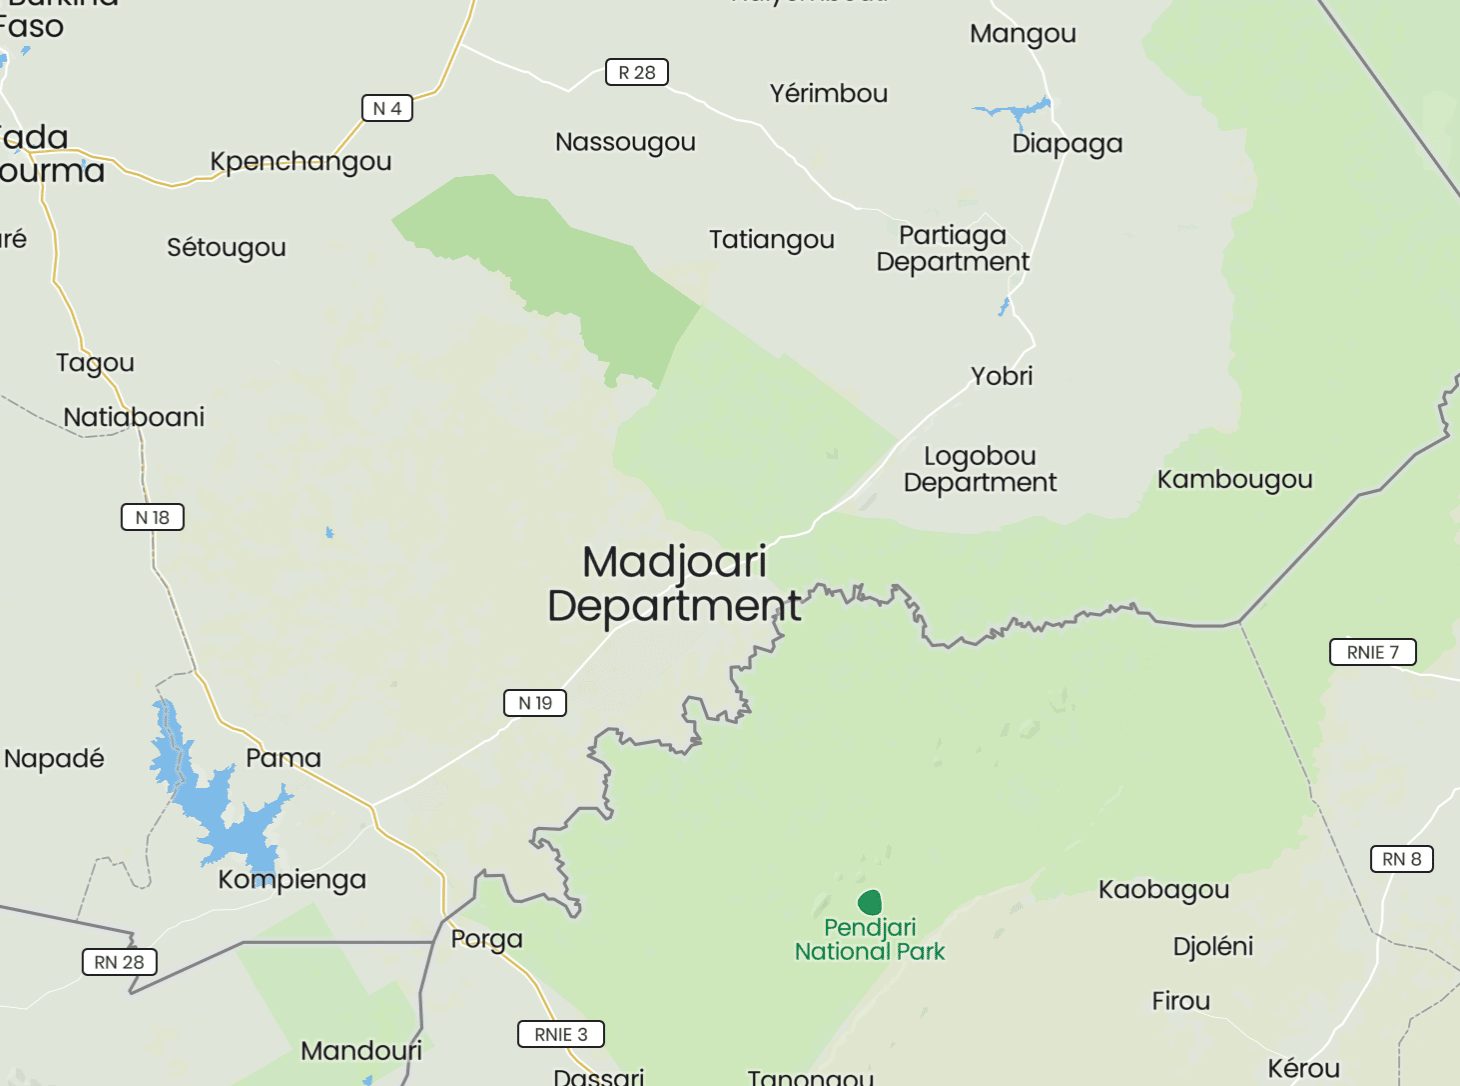 Madjoari Department of Kompienga Province, Est Region, Burkina Faso